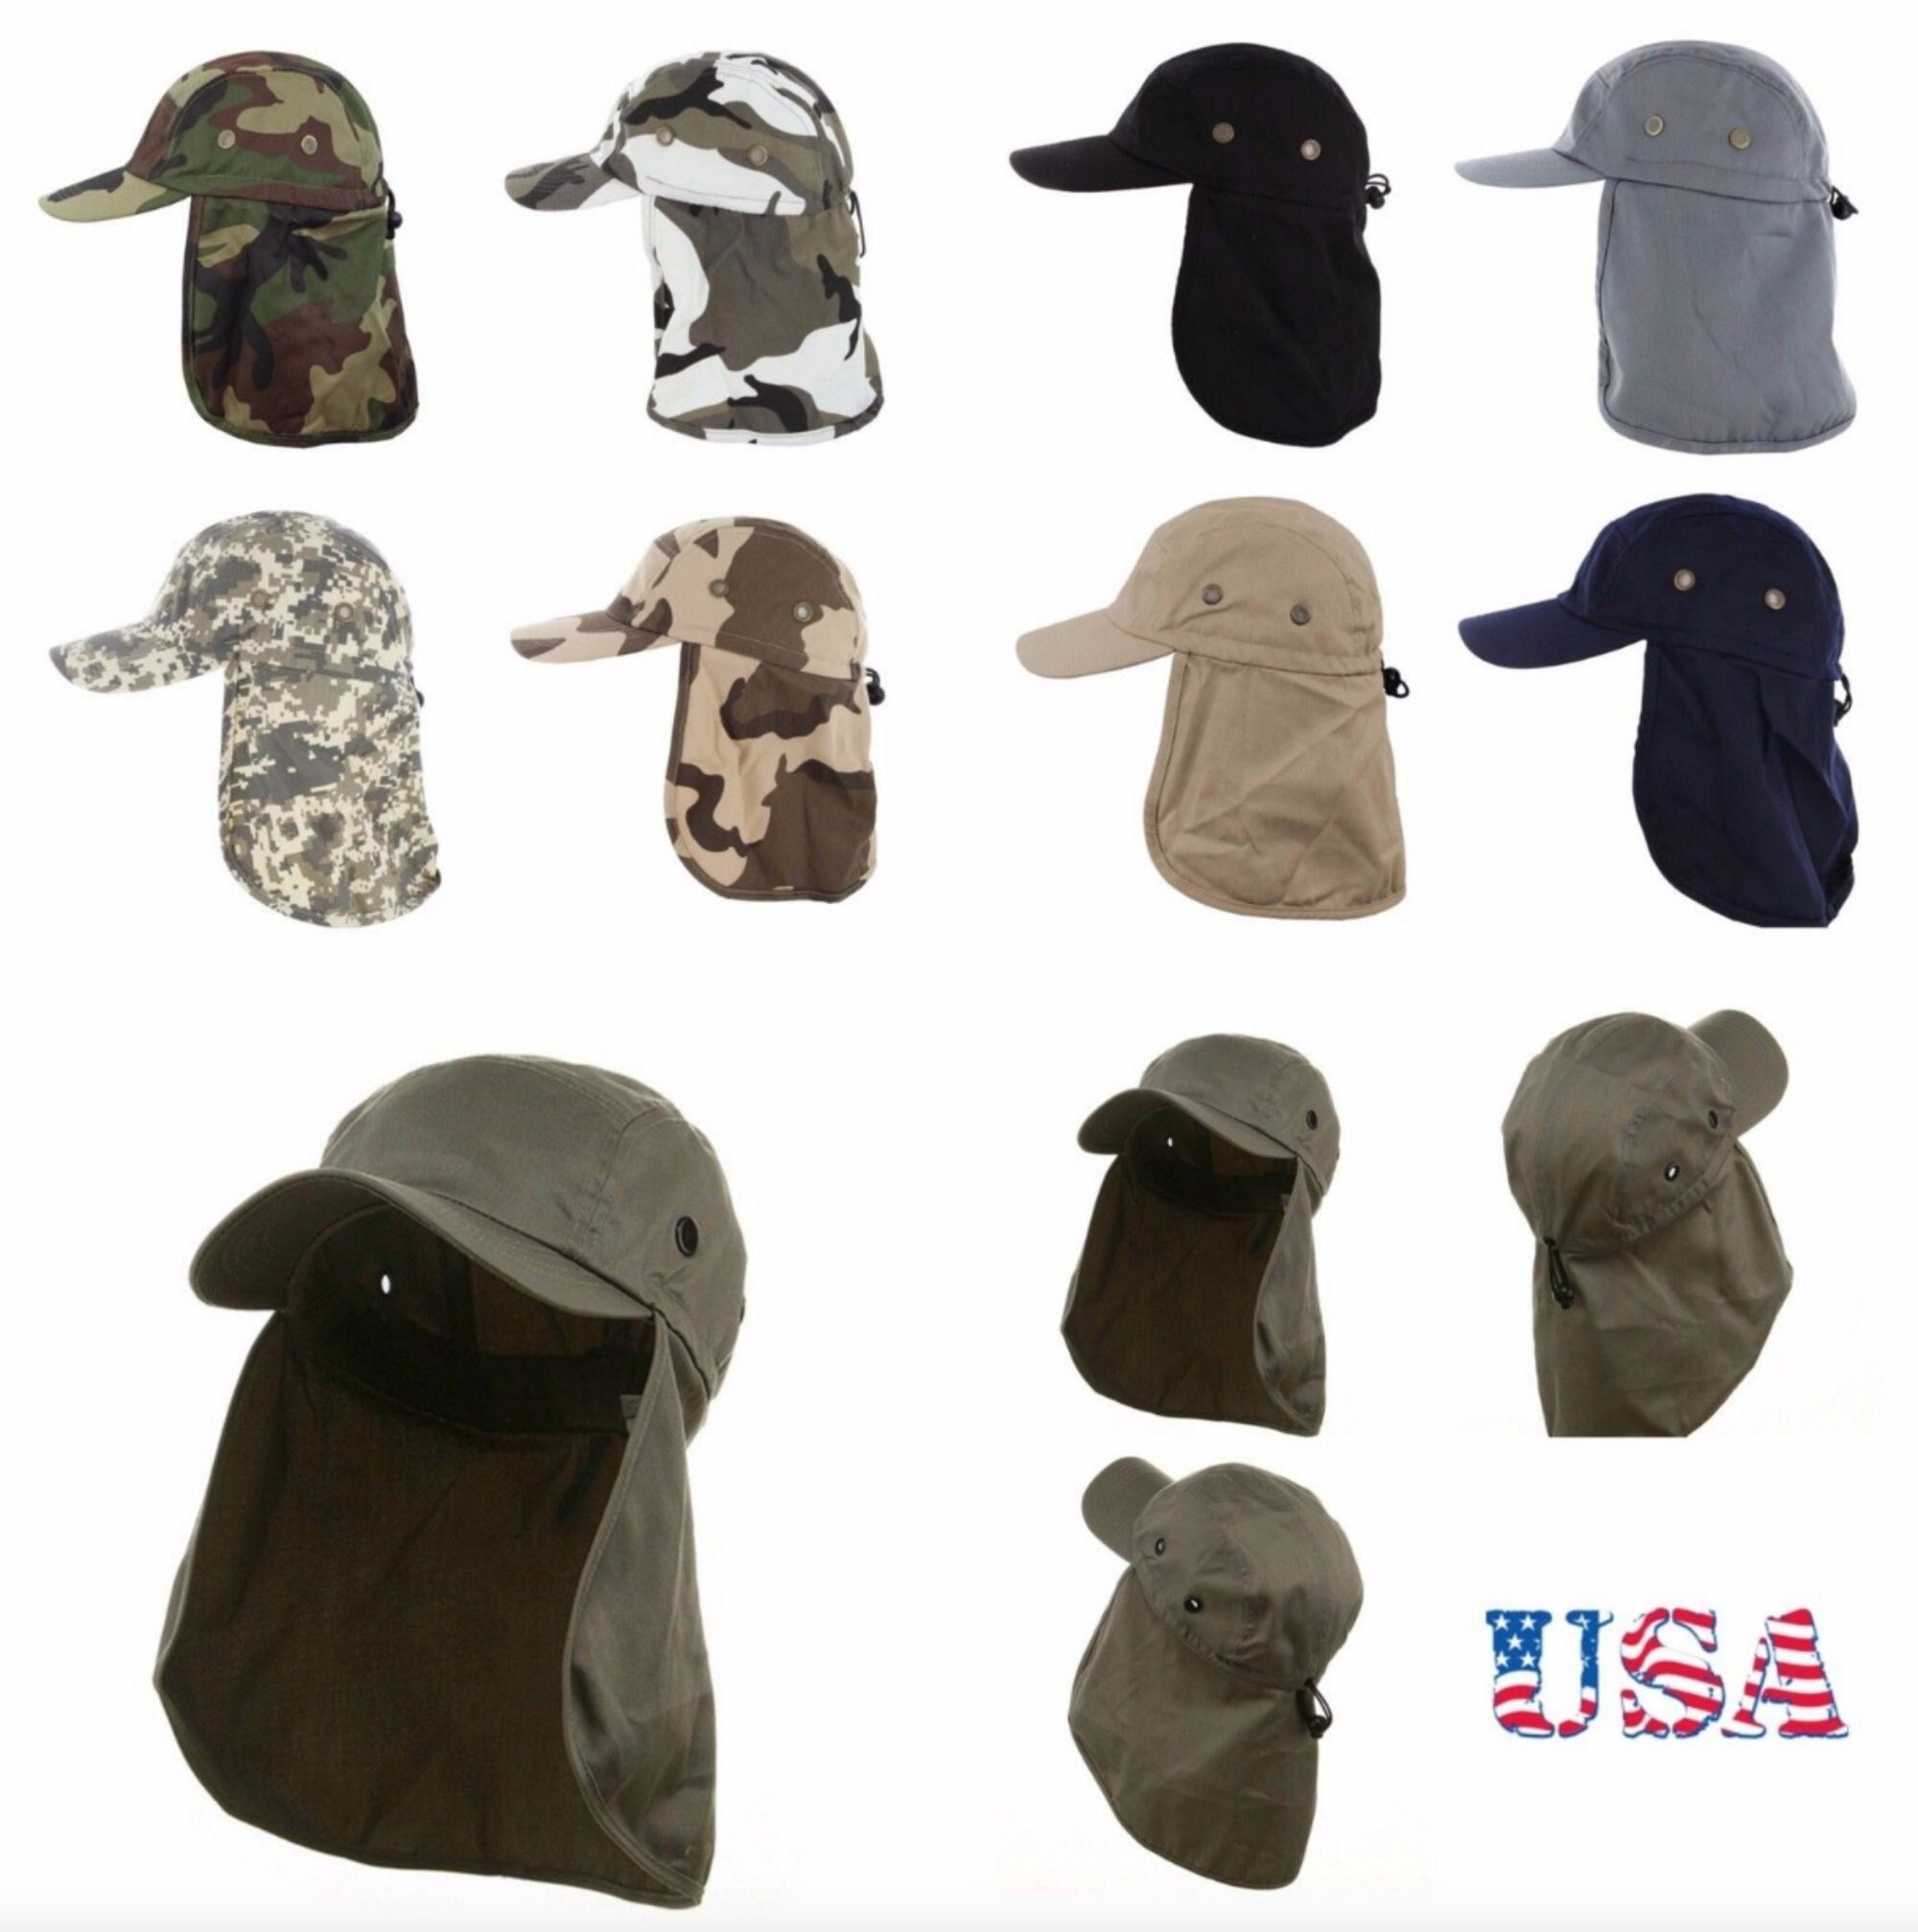 Bucket Hat, Camo Skull Sun Hat, Children Sun Hat, Chin Strap Cap, Play School List, Toddler Fishing Gear, Child, Green Hat, Boys Hat, Bh25